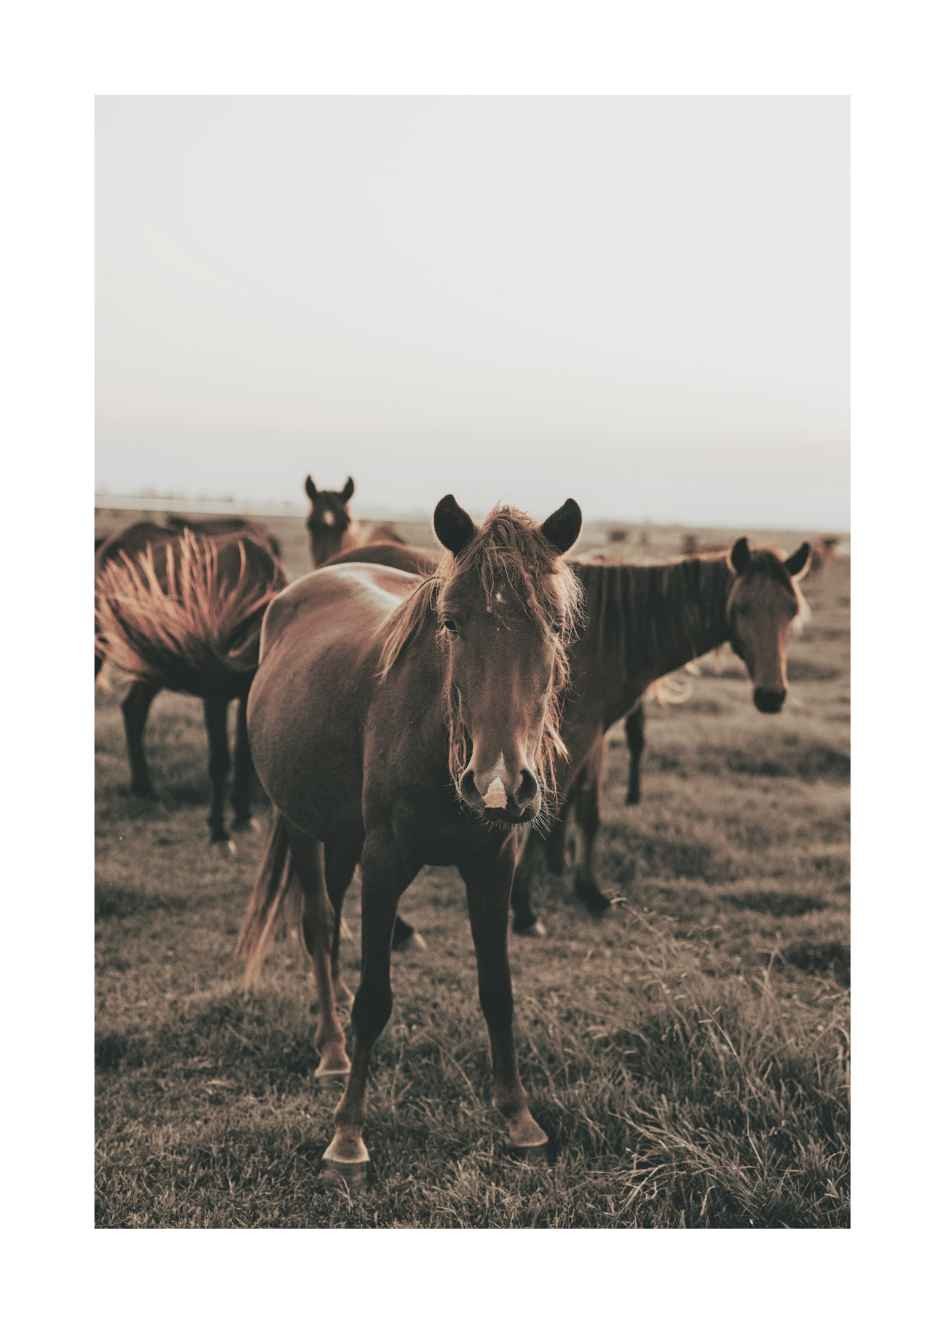 Plakat Koń